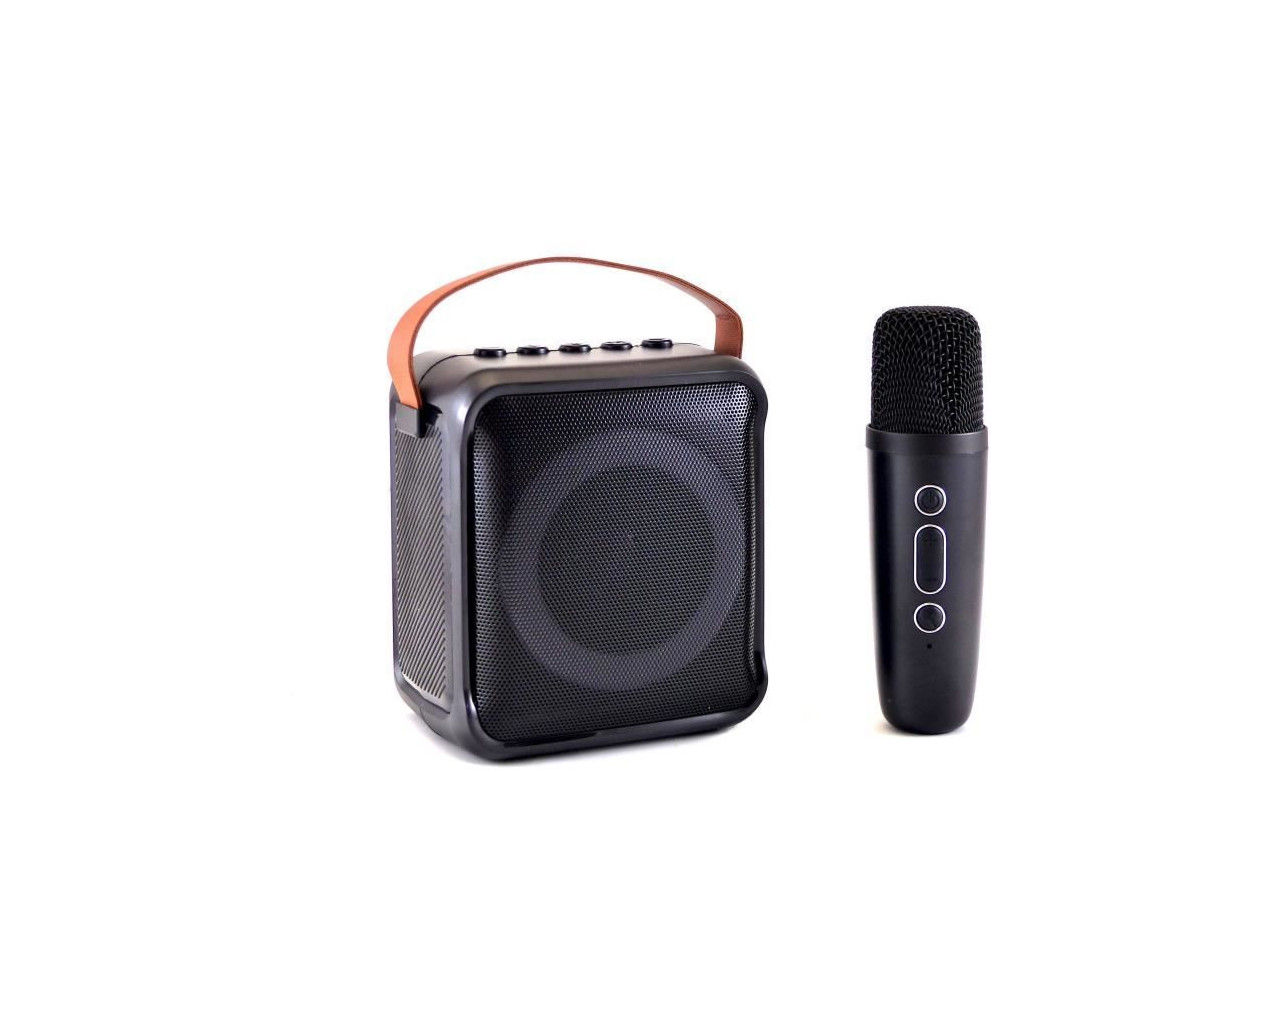 Oreillette Clip Bluetooth mono noire anti bruit origine Sony Ericsson